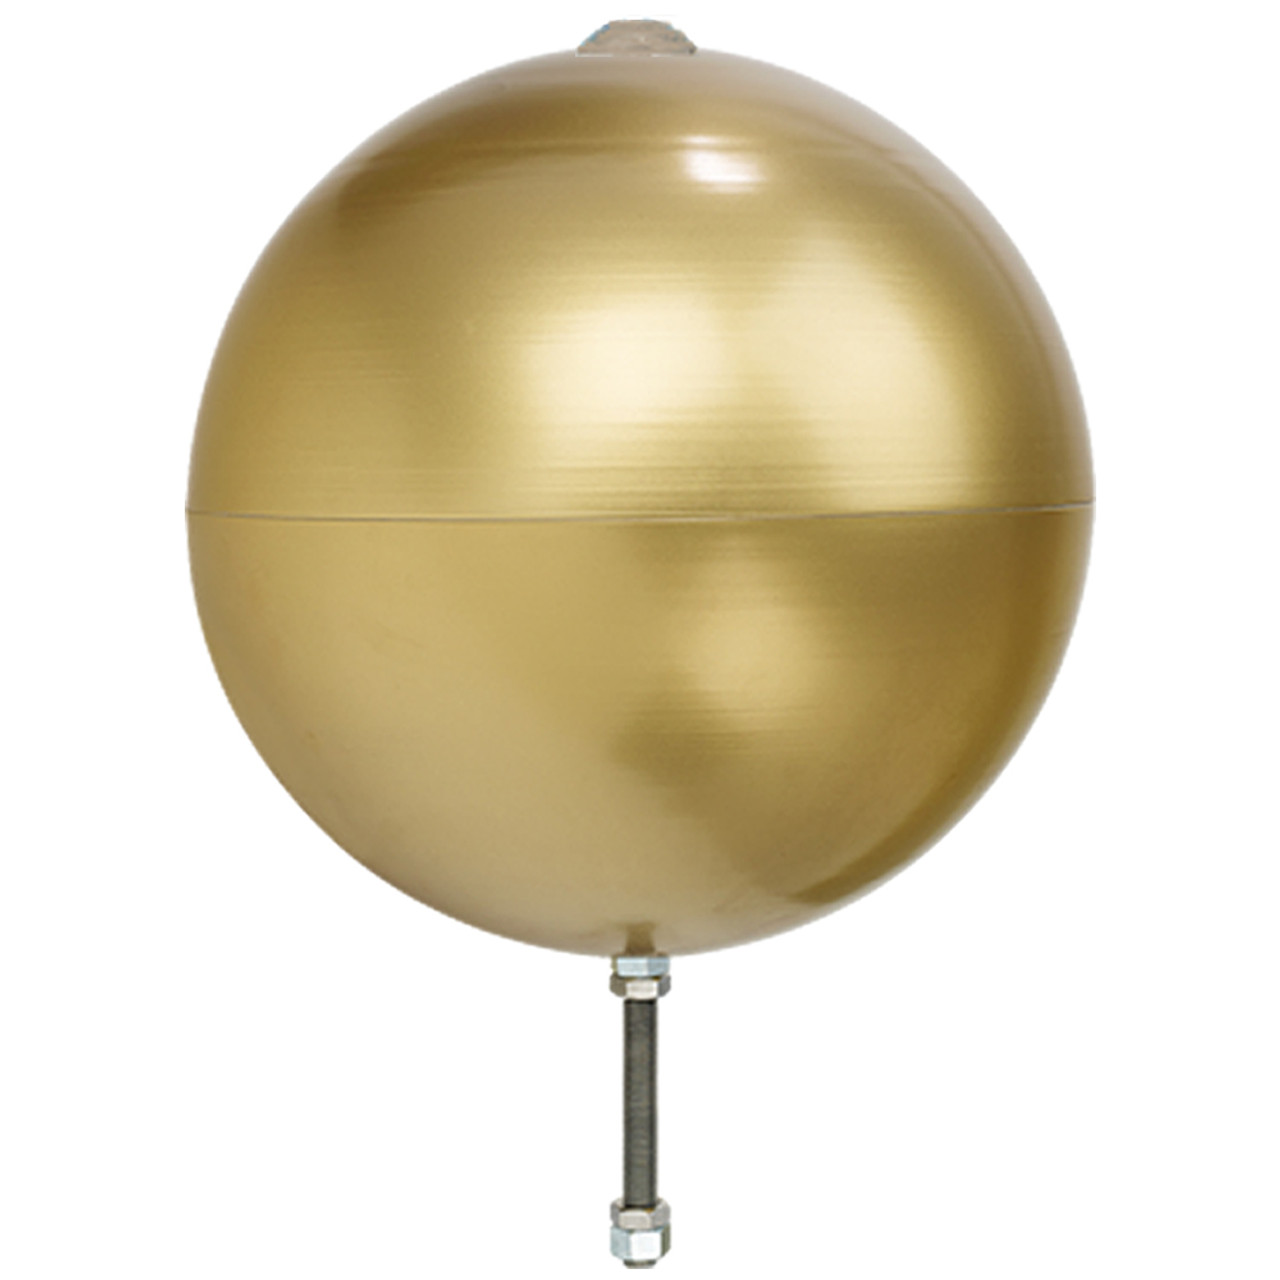 Extra Large Heavy Duty Flagpole Ball Ornaments